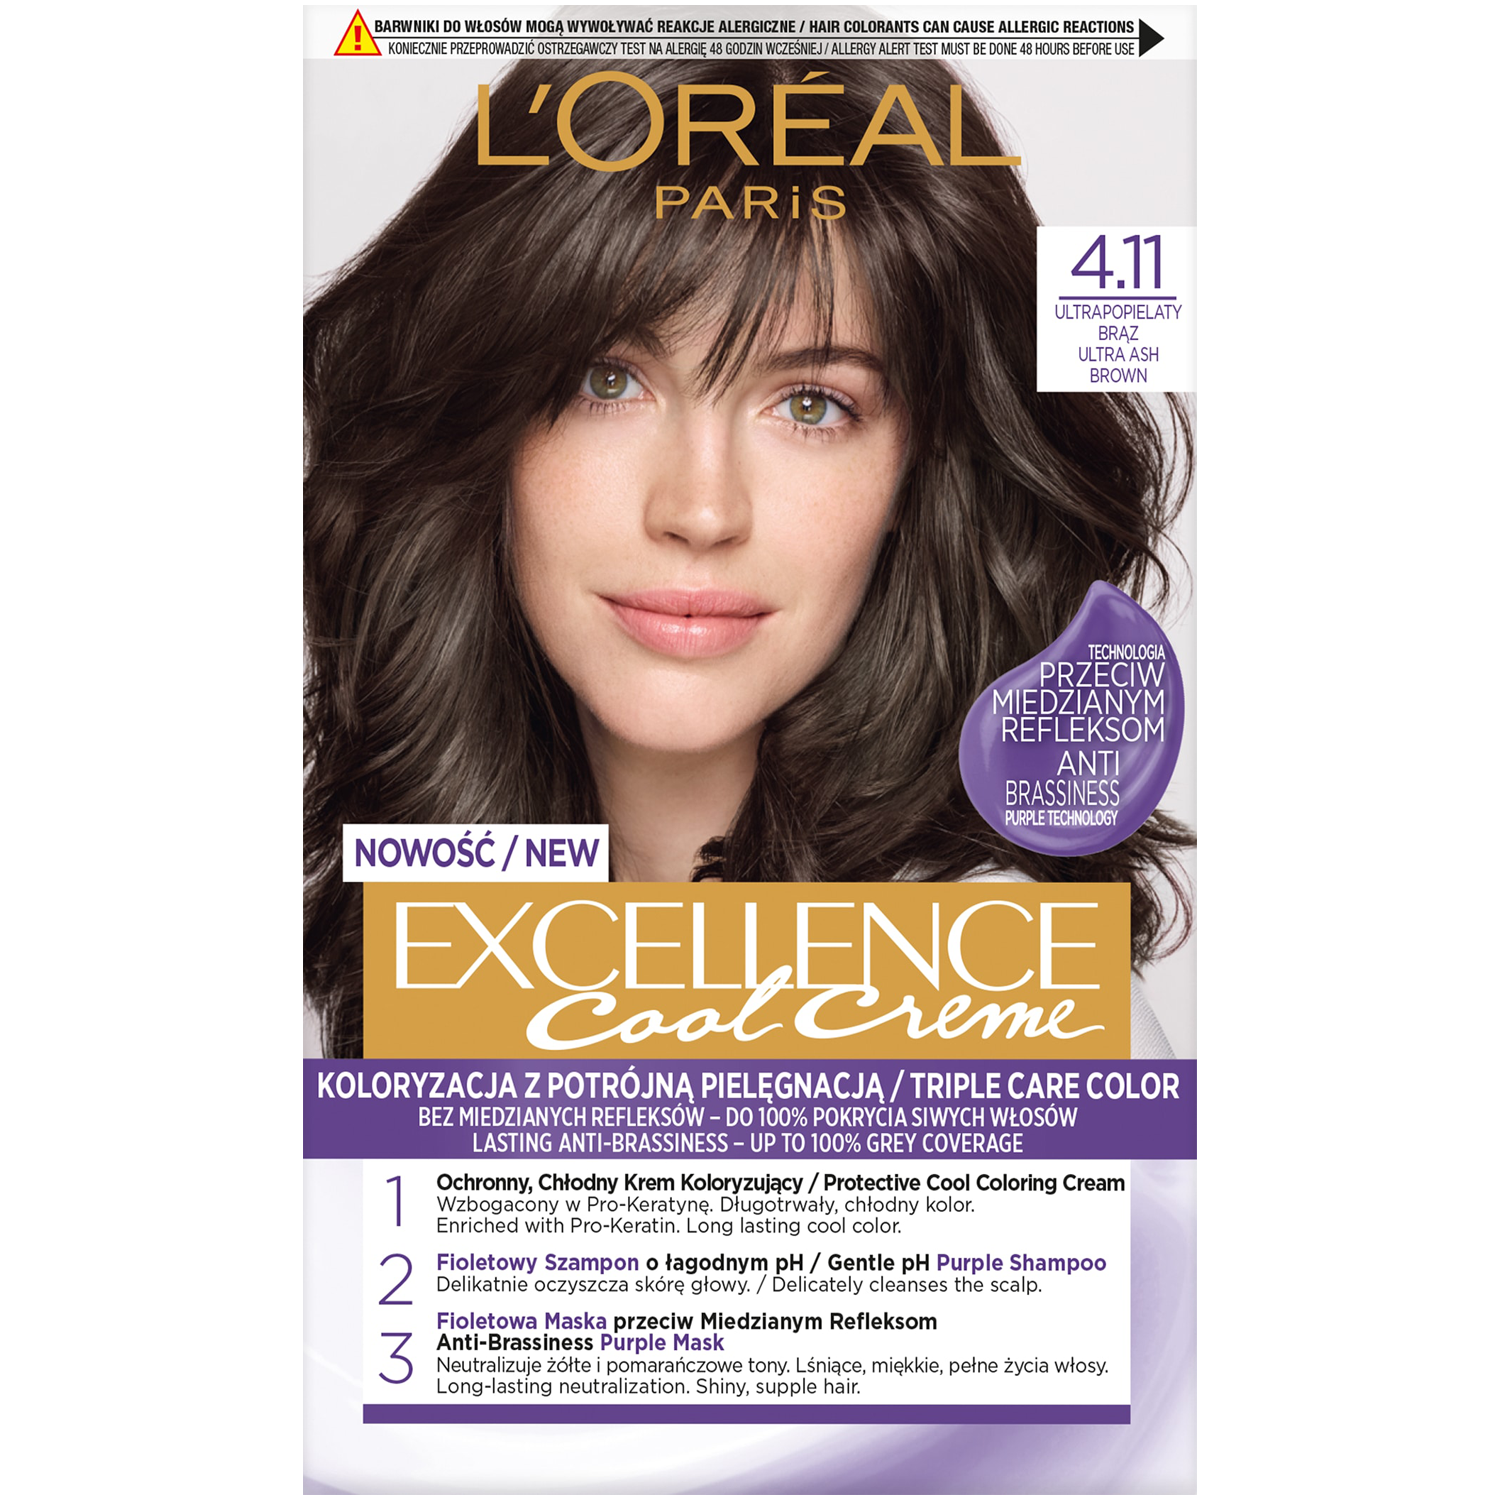 L'Oréal Paris Cool Creme farba do włosów popielaty brąz 4.11, 1 opak. |  hebe.pl